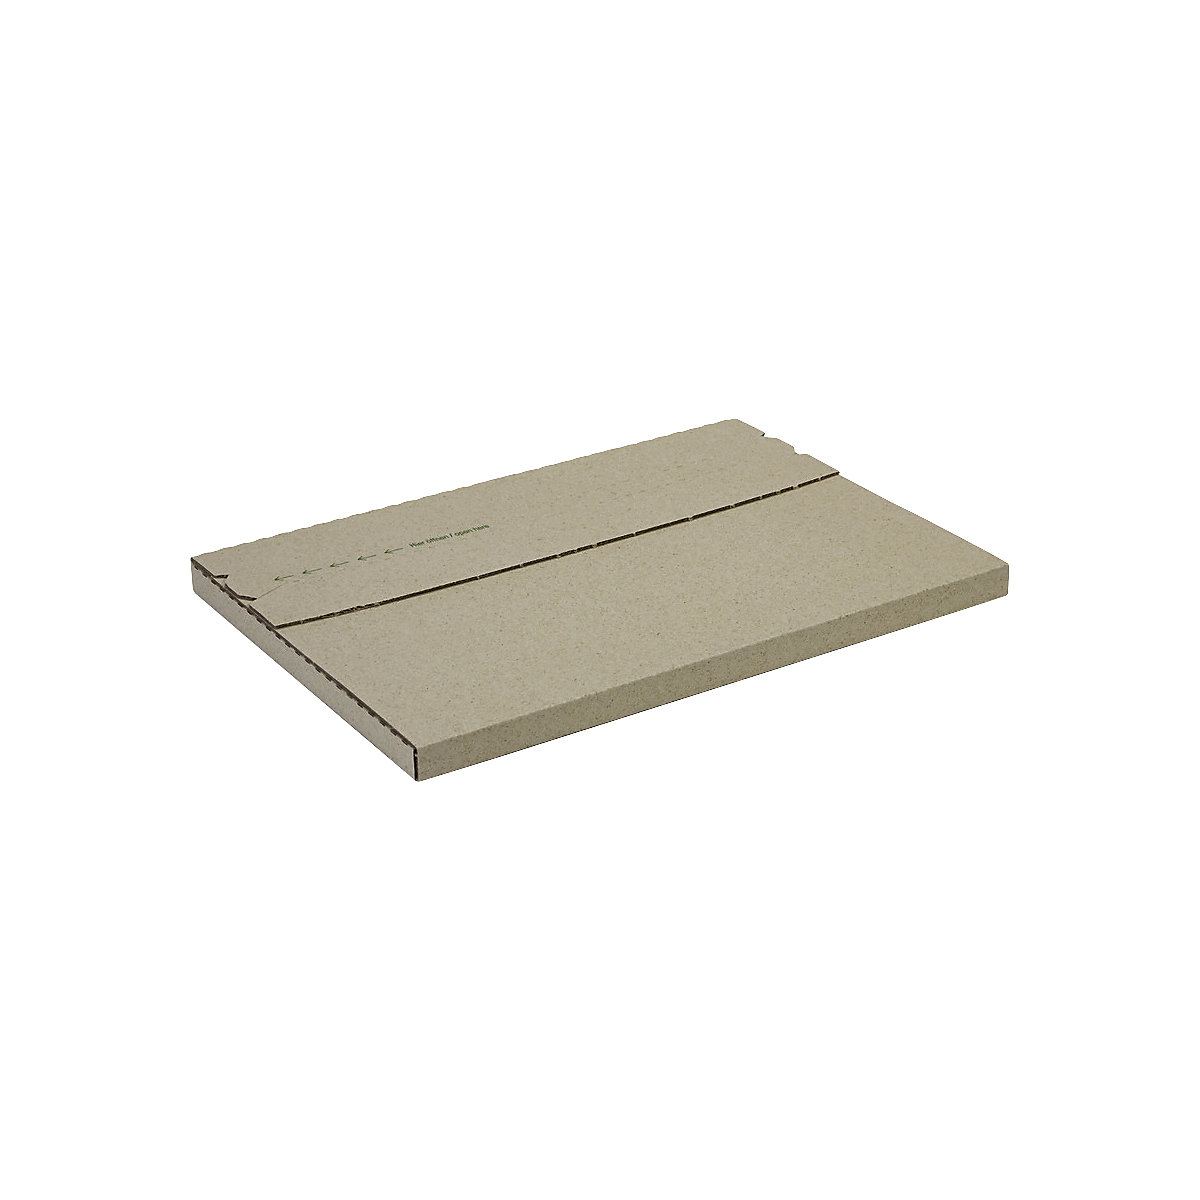 Graspapier-Flachpack terra, selbstklebend, Innen-LxBxH 314 x 225 x 13 mm, ab 200 Stk-3